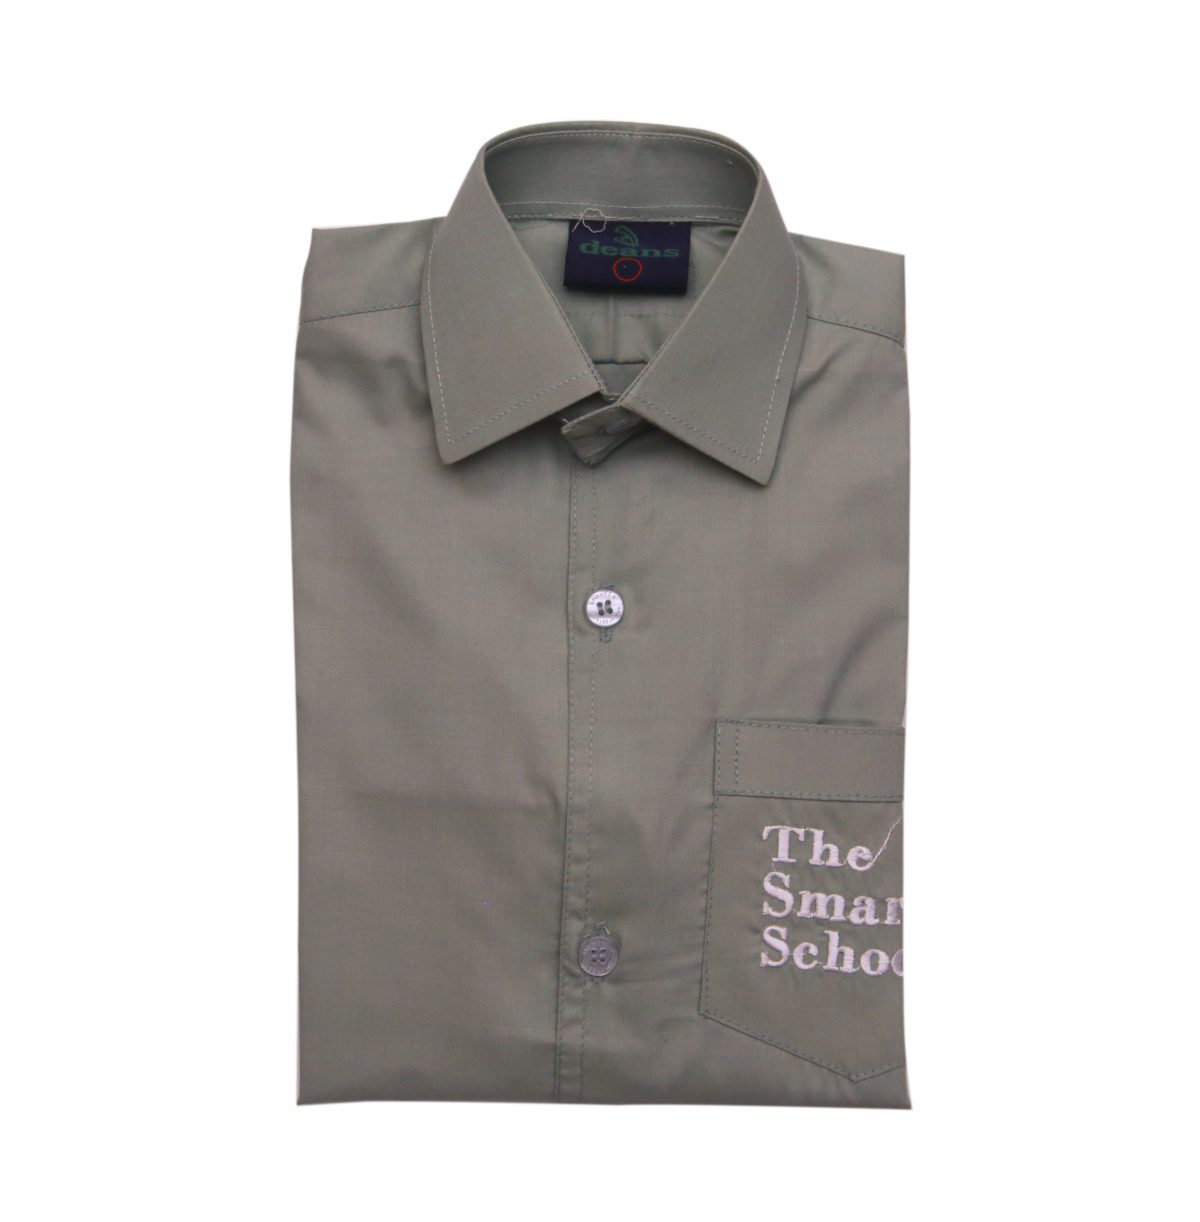 The smart school uniform